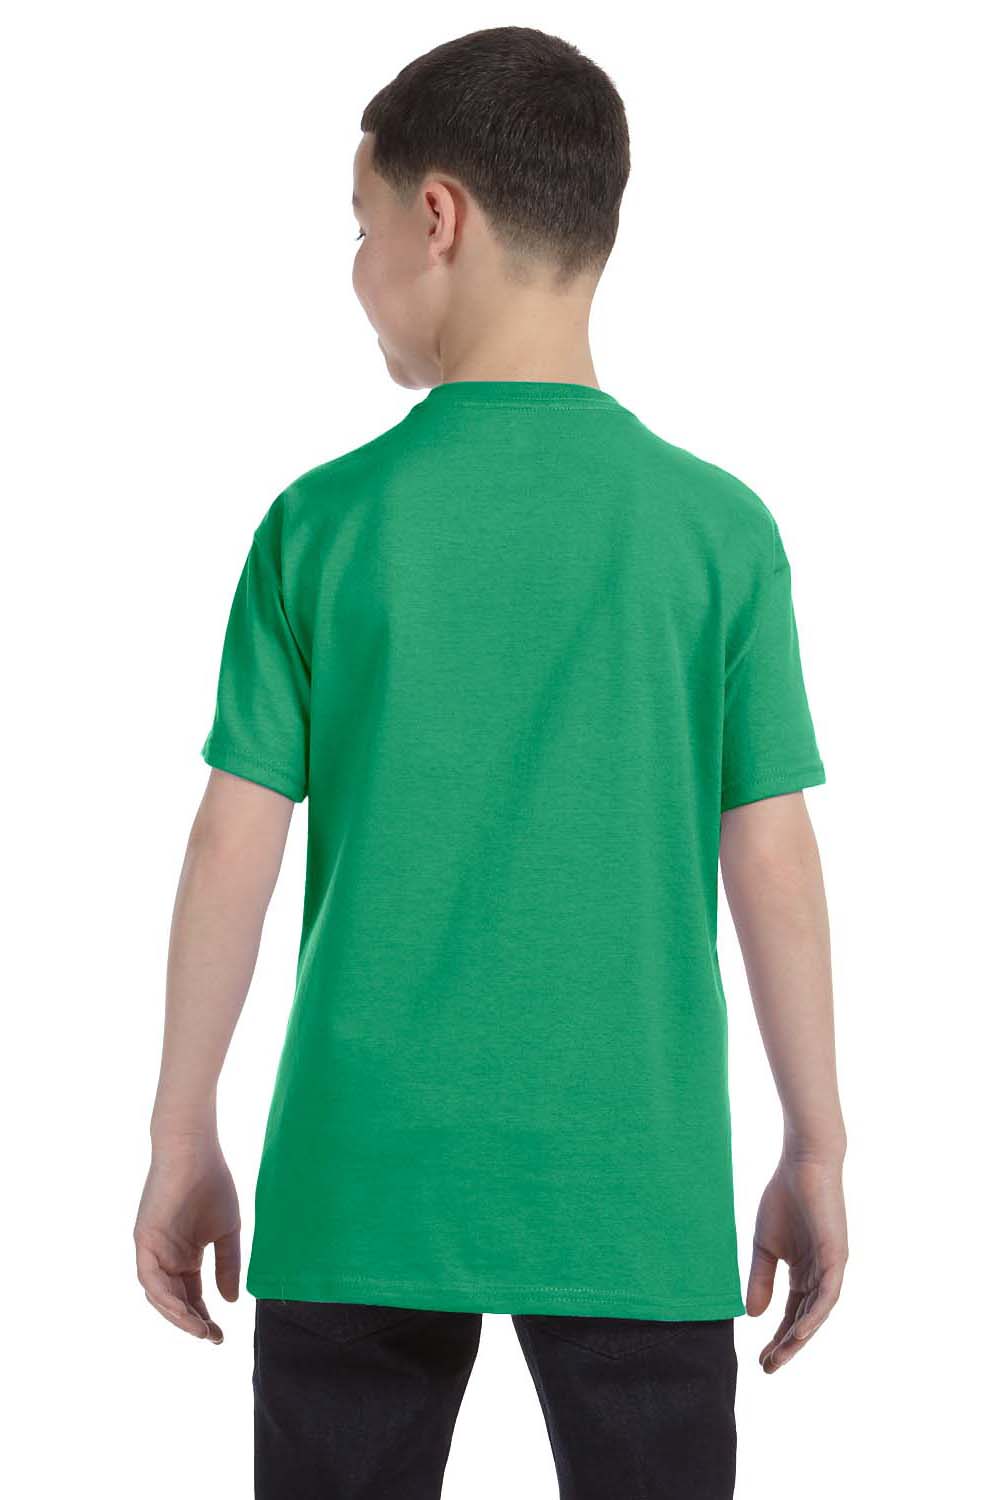 Jerzees 29B Youth Dri-Power Moisture Wicking Short Sleeve Crewneck T-Shirt Kelly Green Back